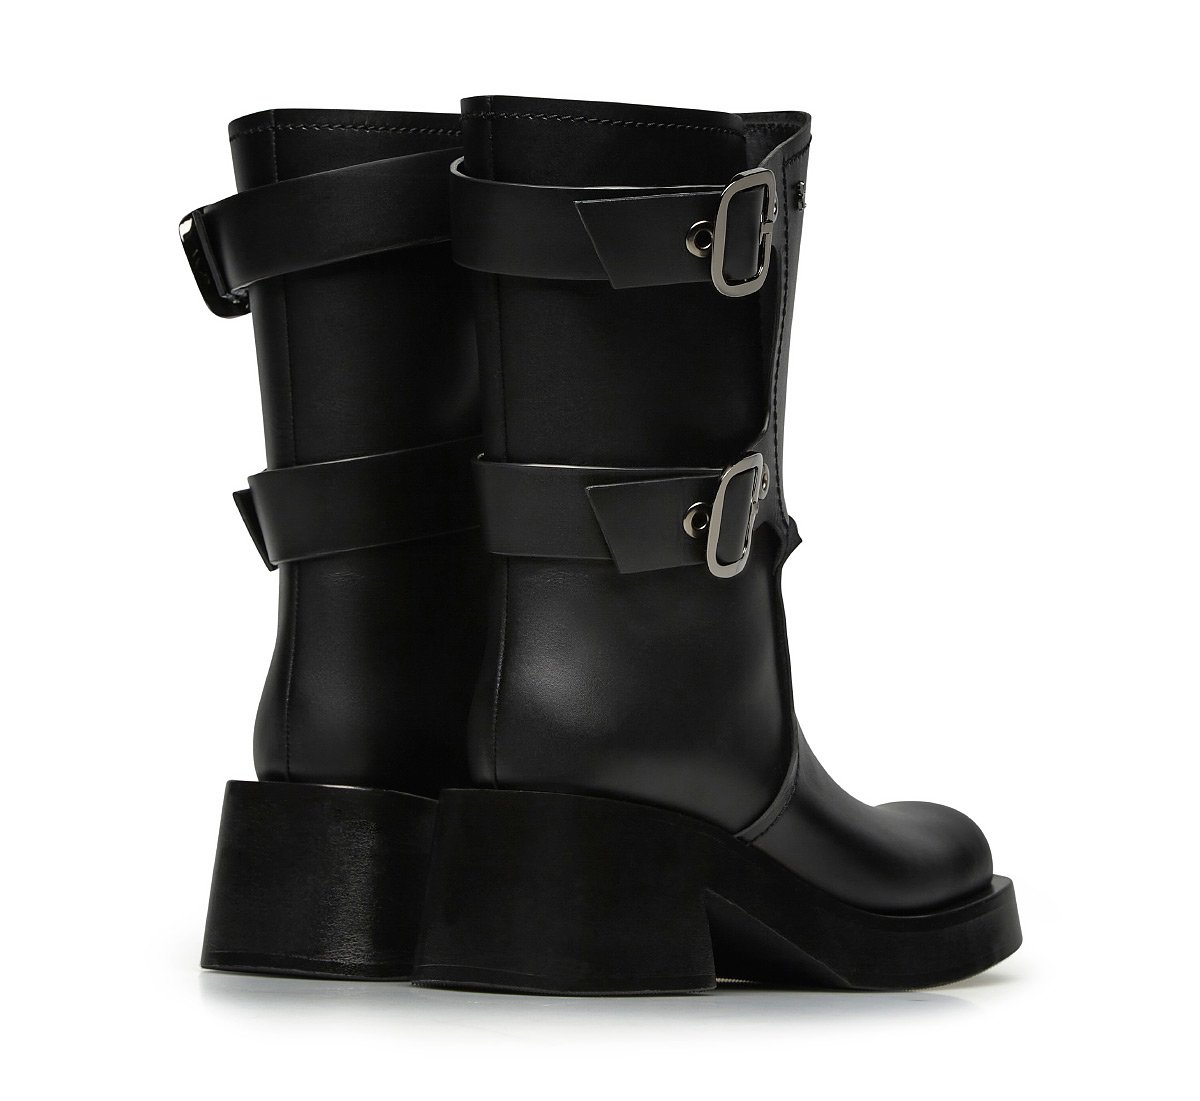 Fabi calf leather boot